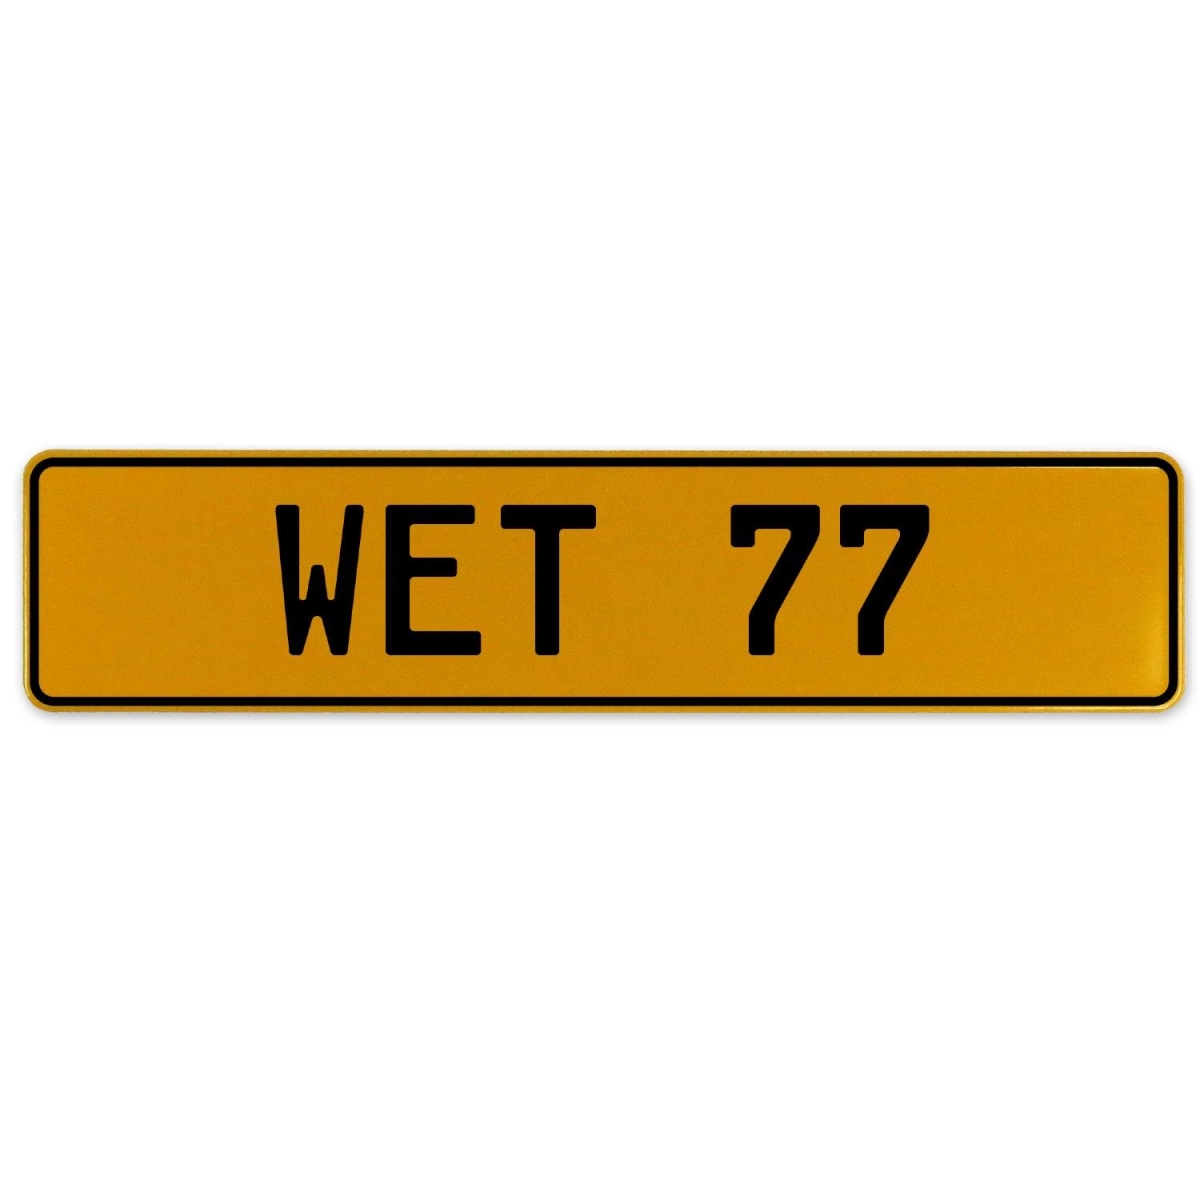 Wet 77 - Yellow Aluminum Street Sign Mancave Euro Plate Name Door Sign Wall